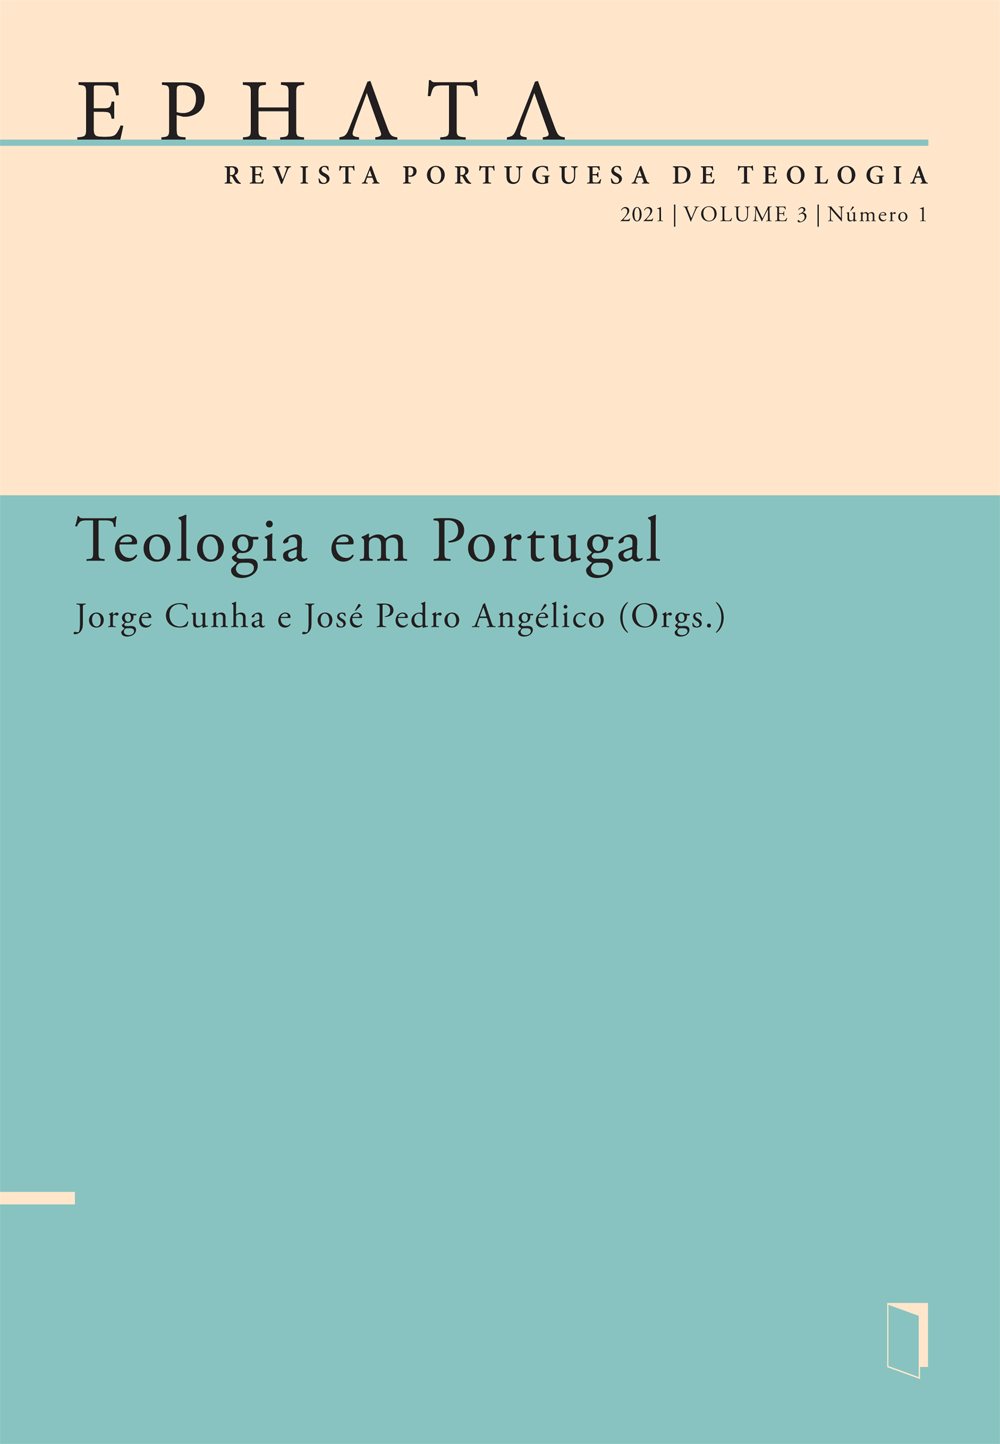 EPHATA v. 3 n. 1 (2021): Teologia em Portugal